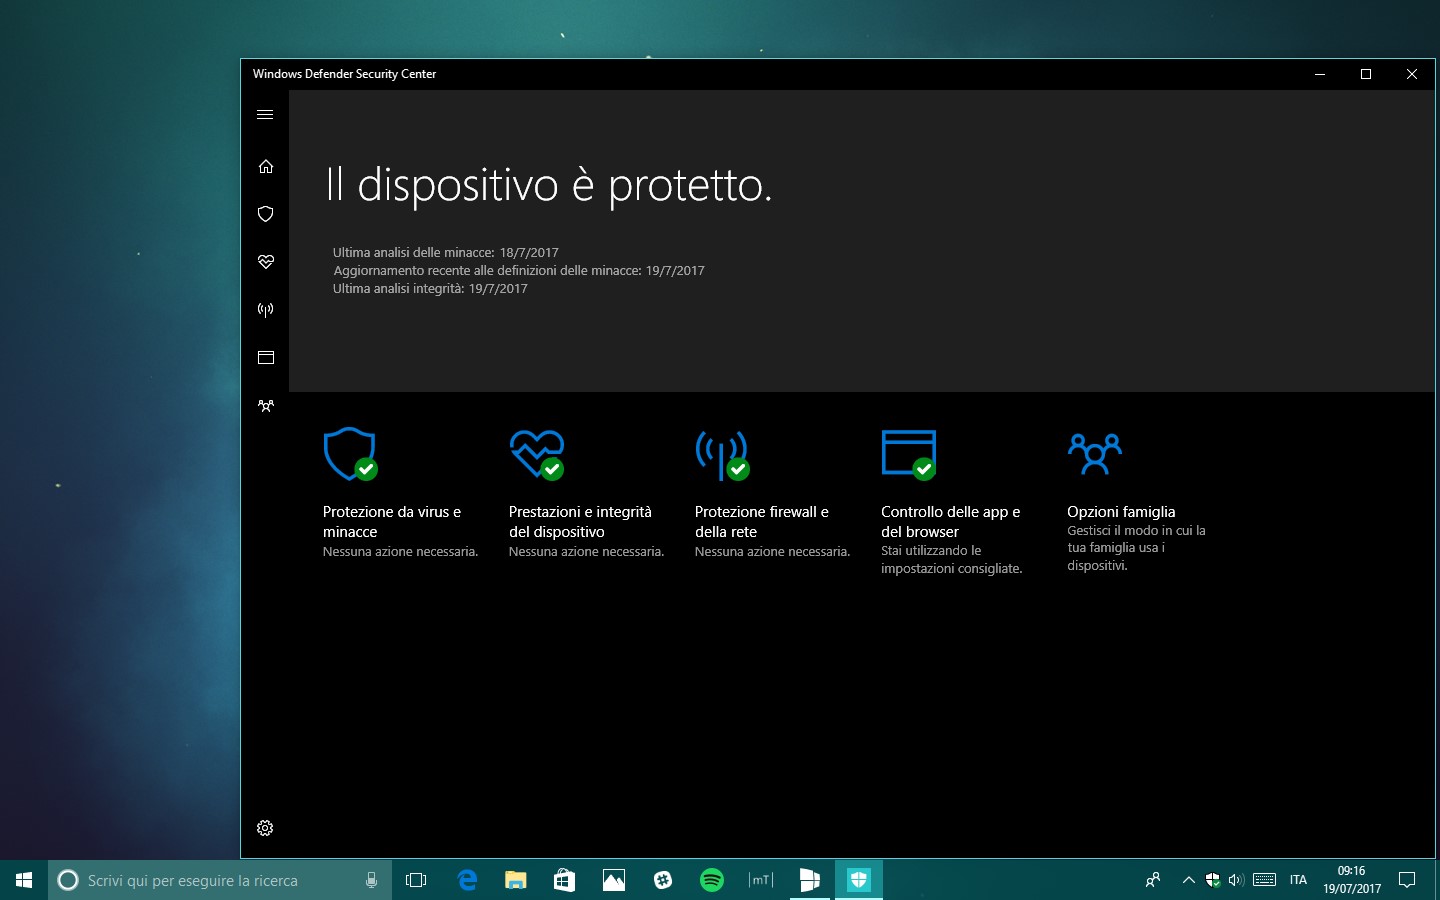 Windows Defender Security Center Windows 10